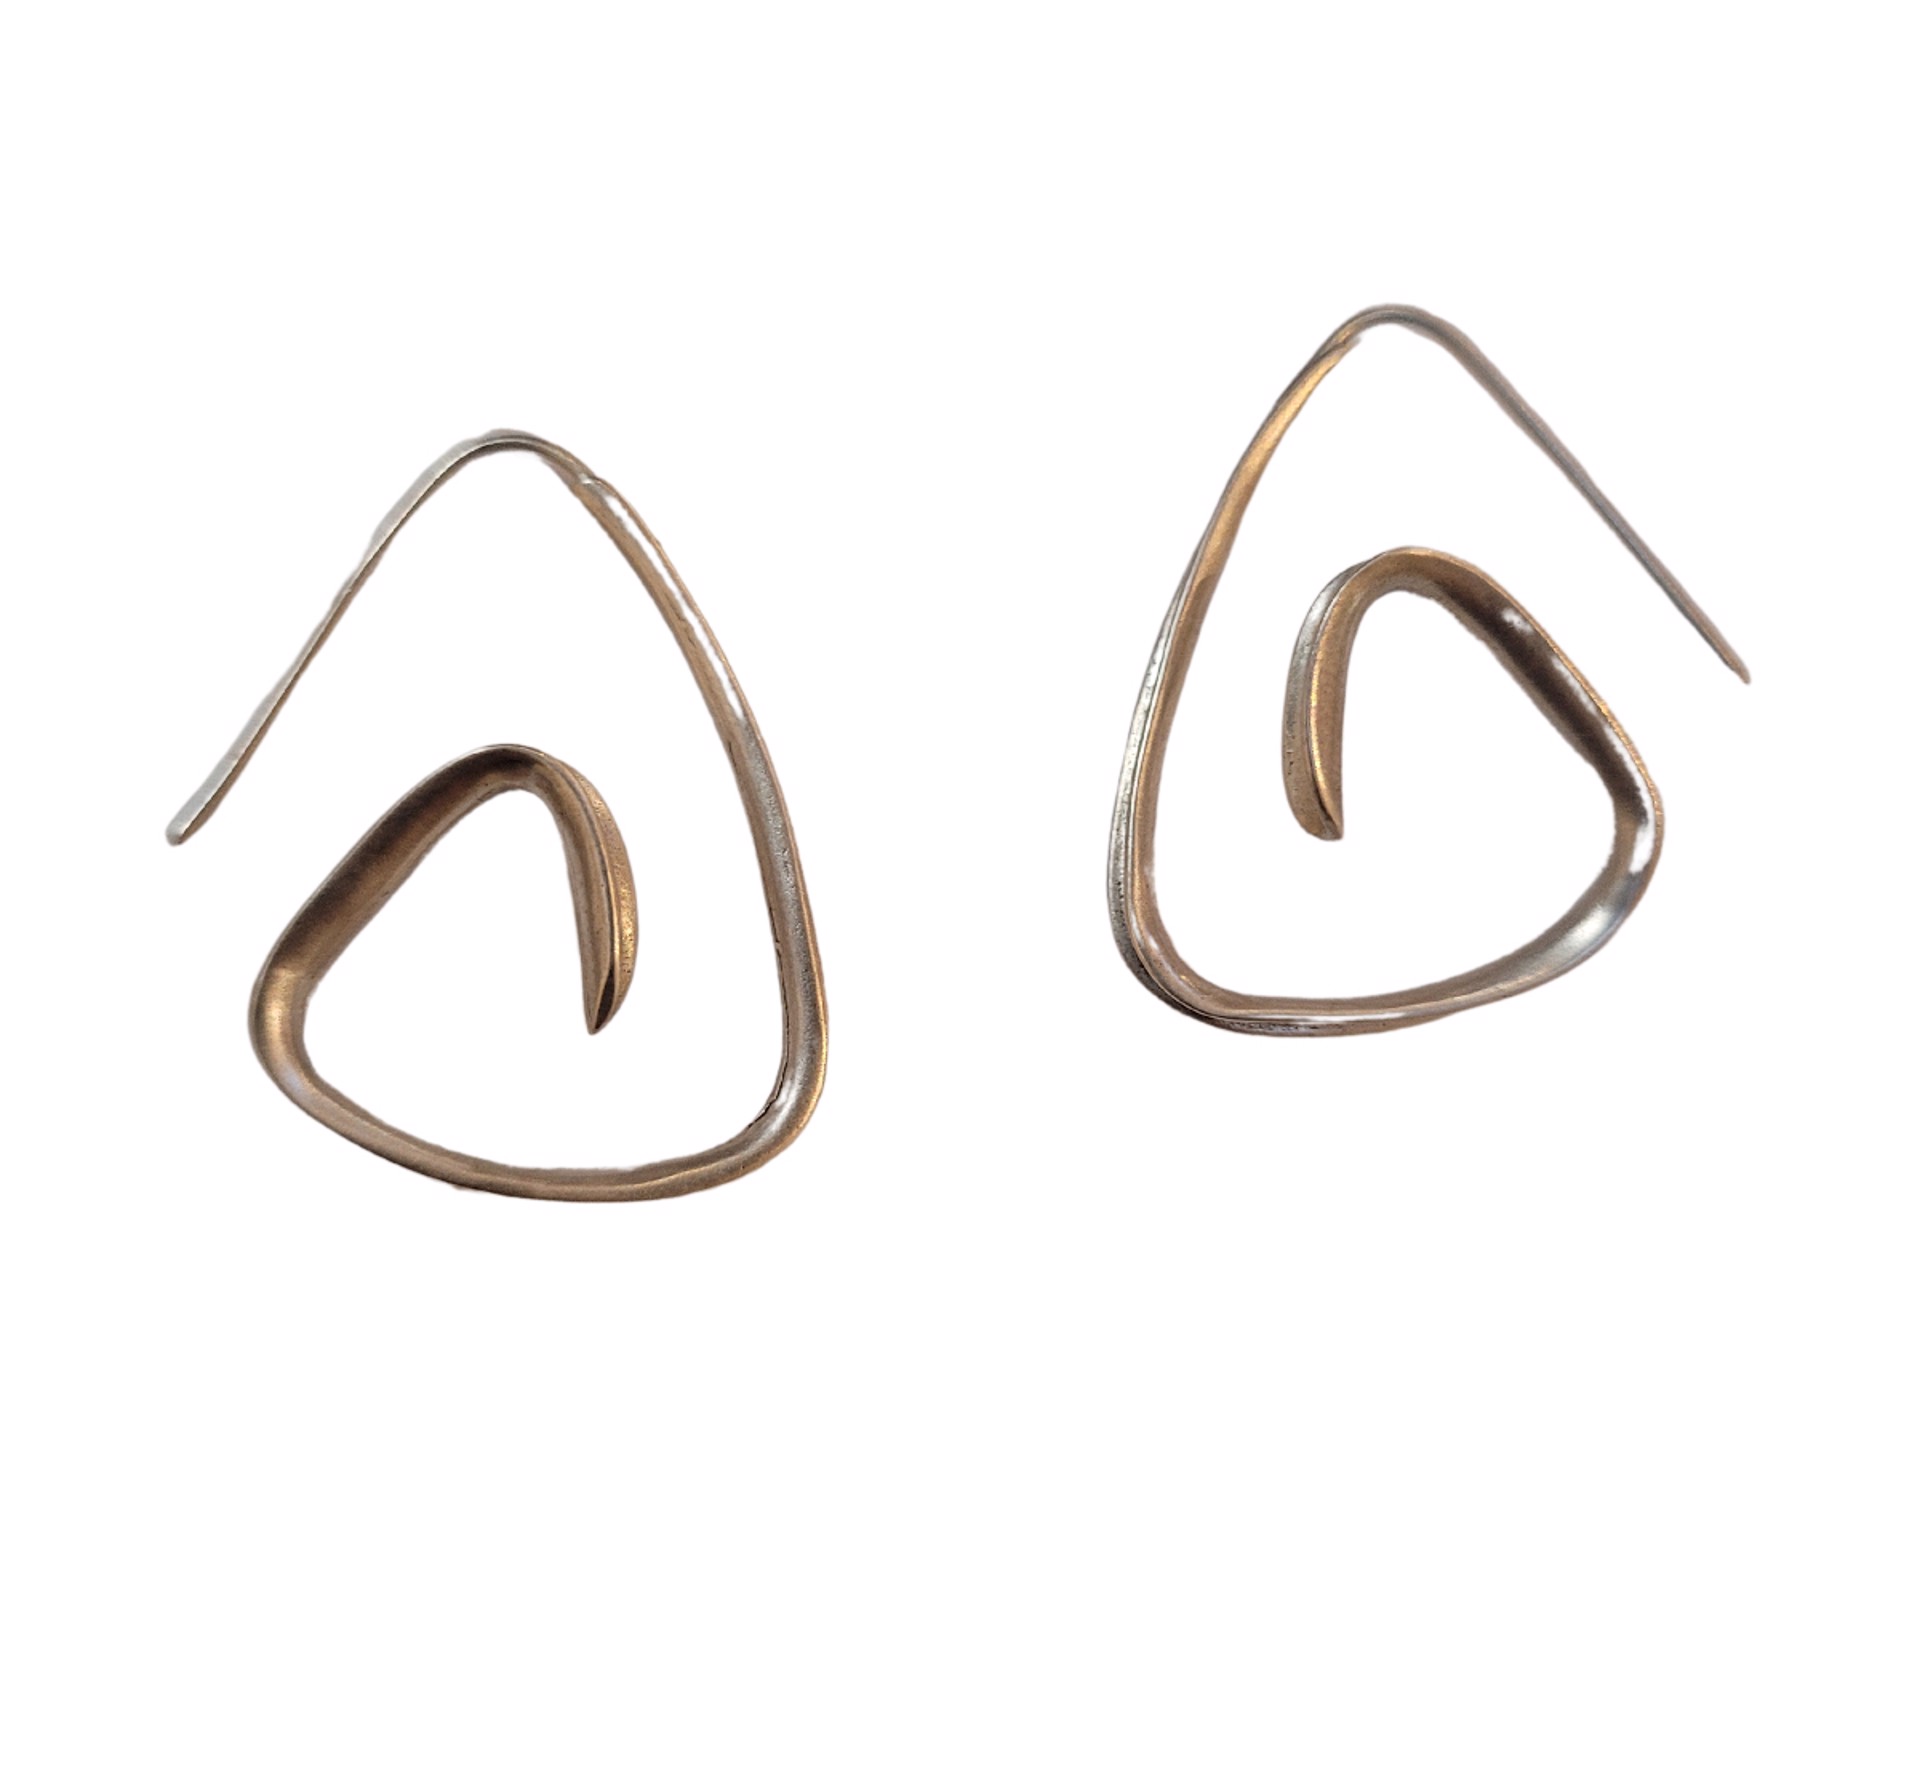 Earrings - Anticlastic Triangle Hoops by Pattie Parkhurst